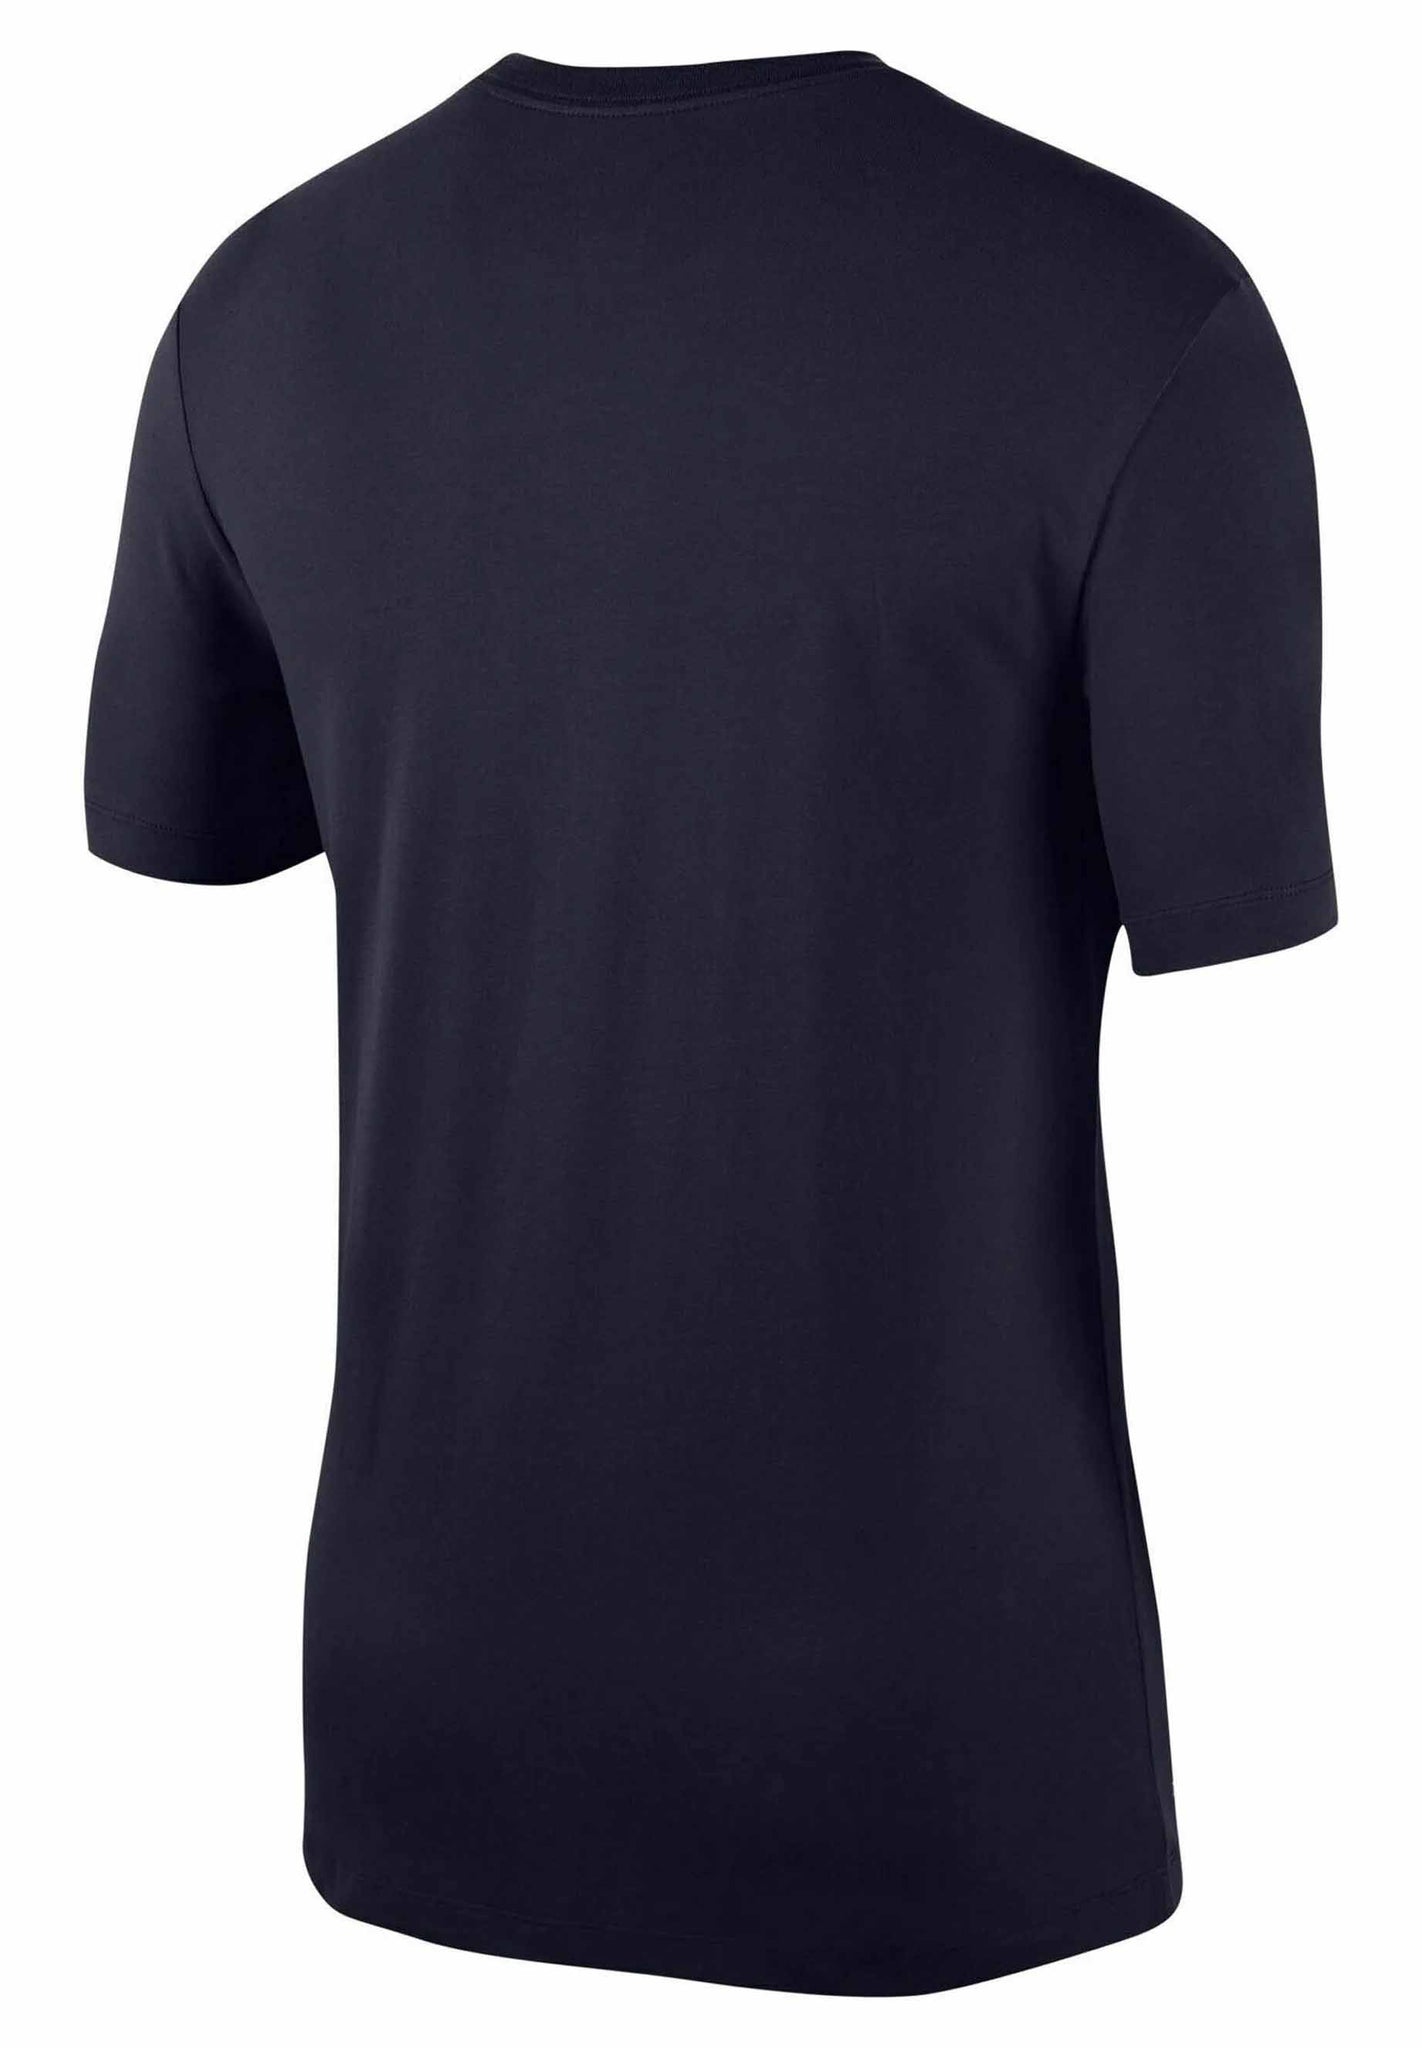 T-Shirt Nike Training DRI-Fit